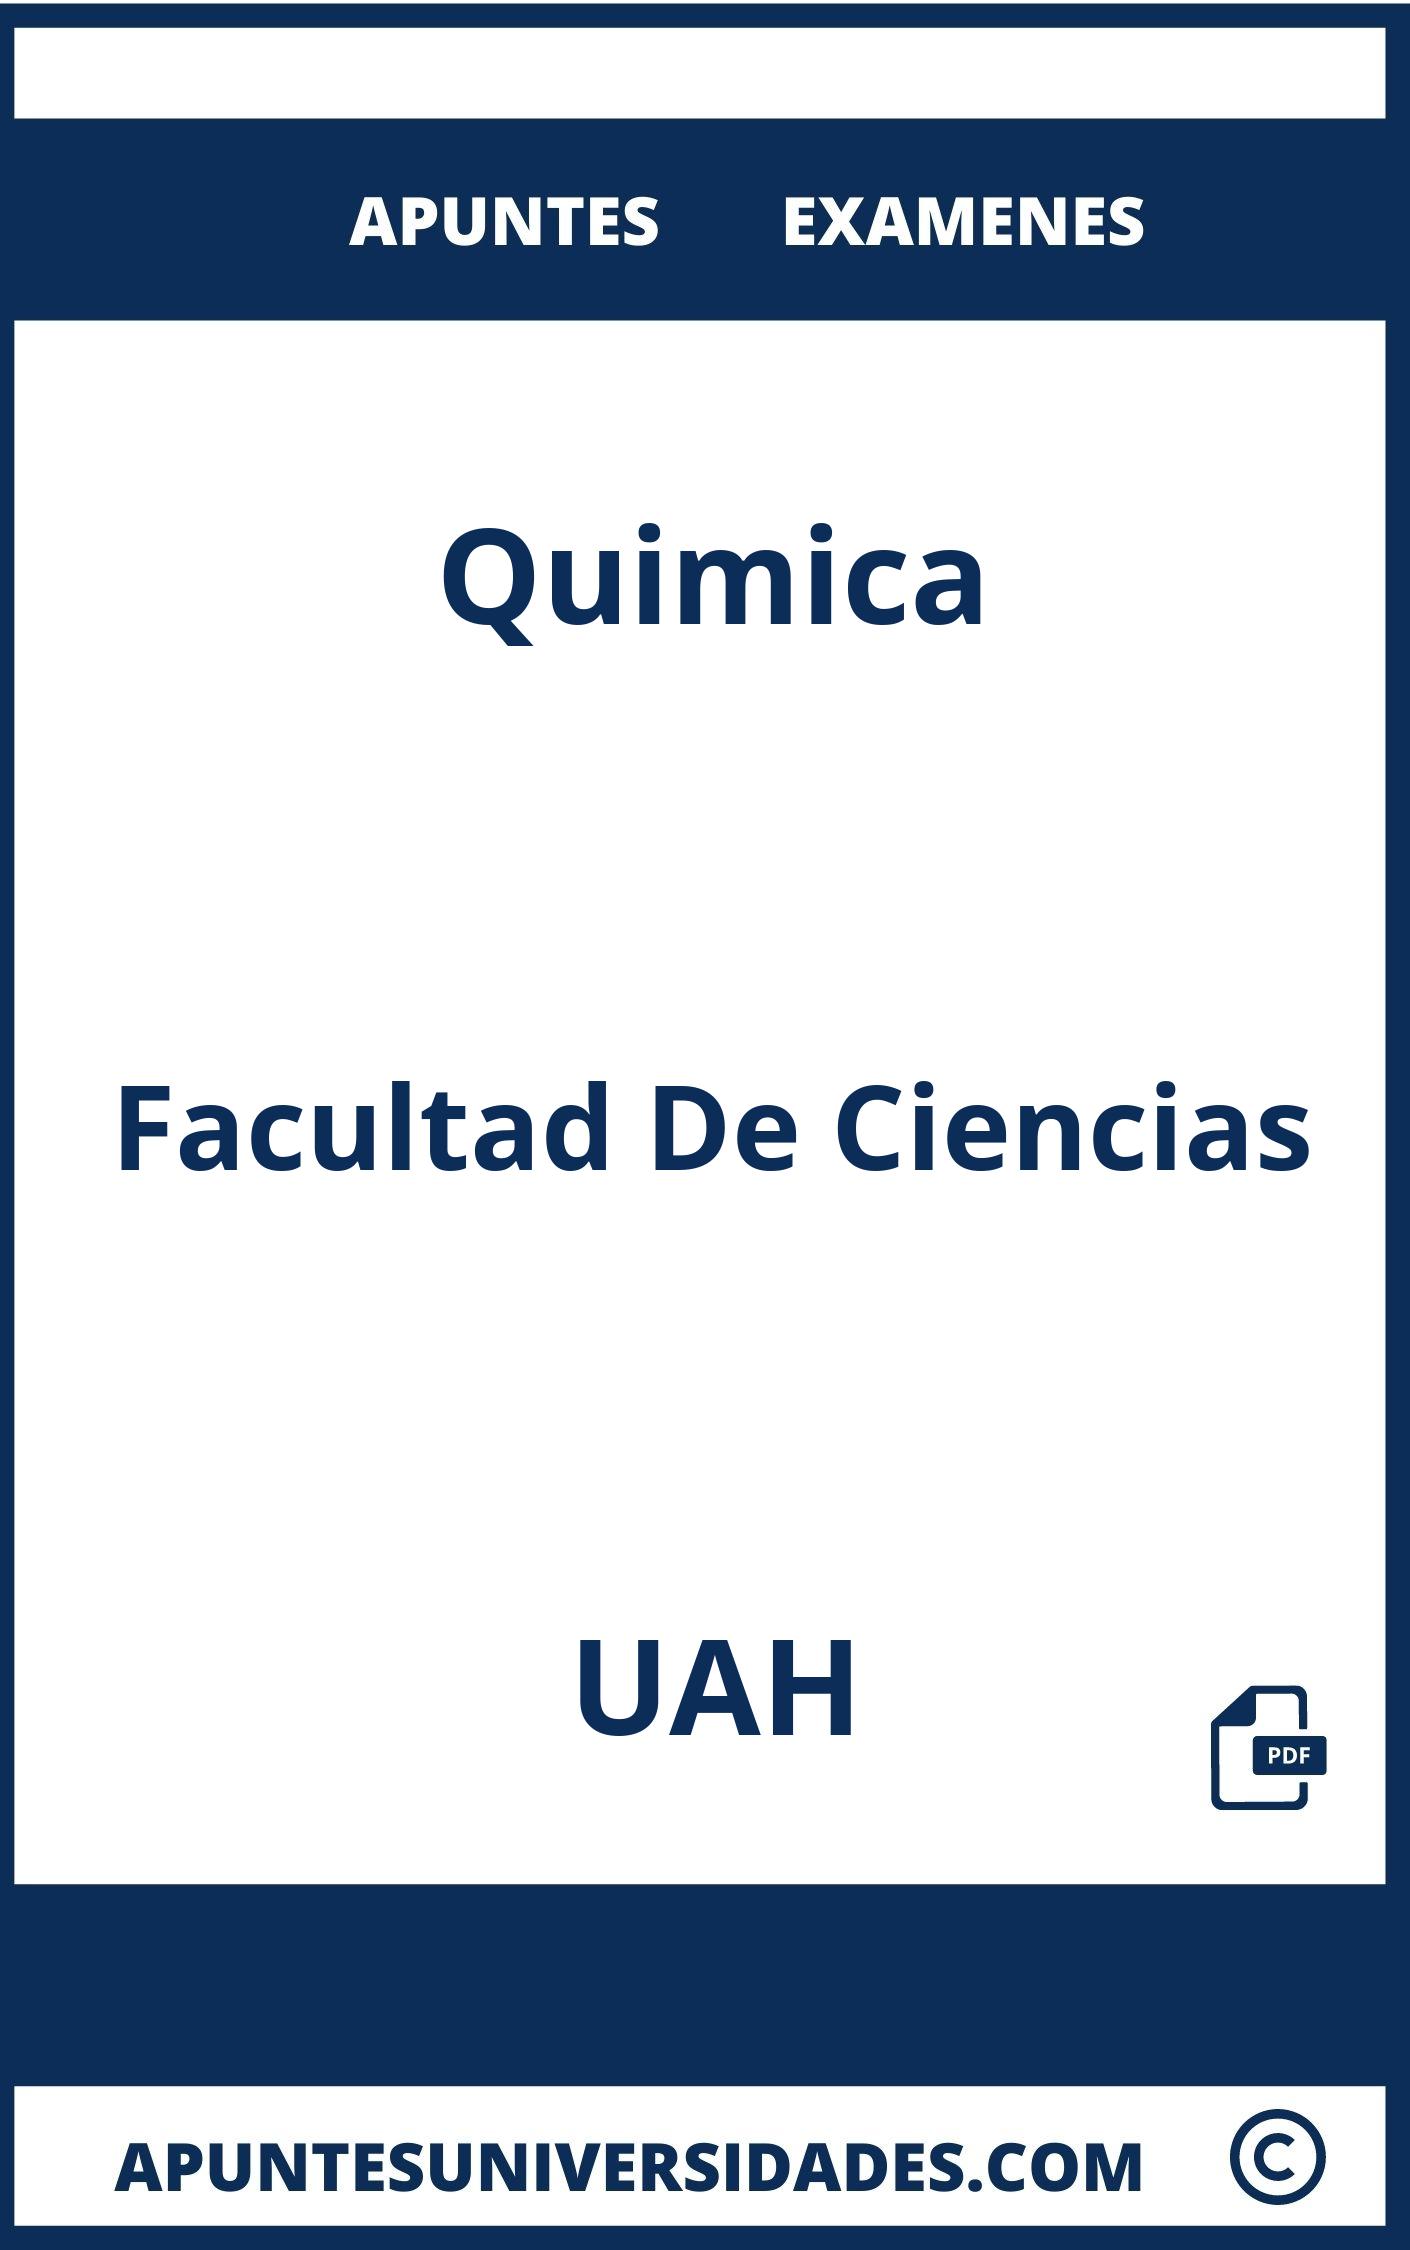 Examenes Apuntes Quimica UAH